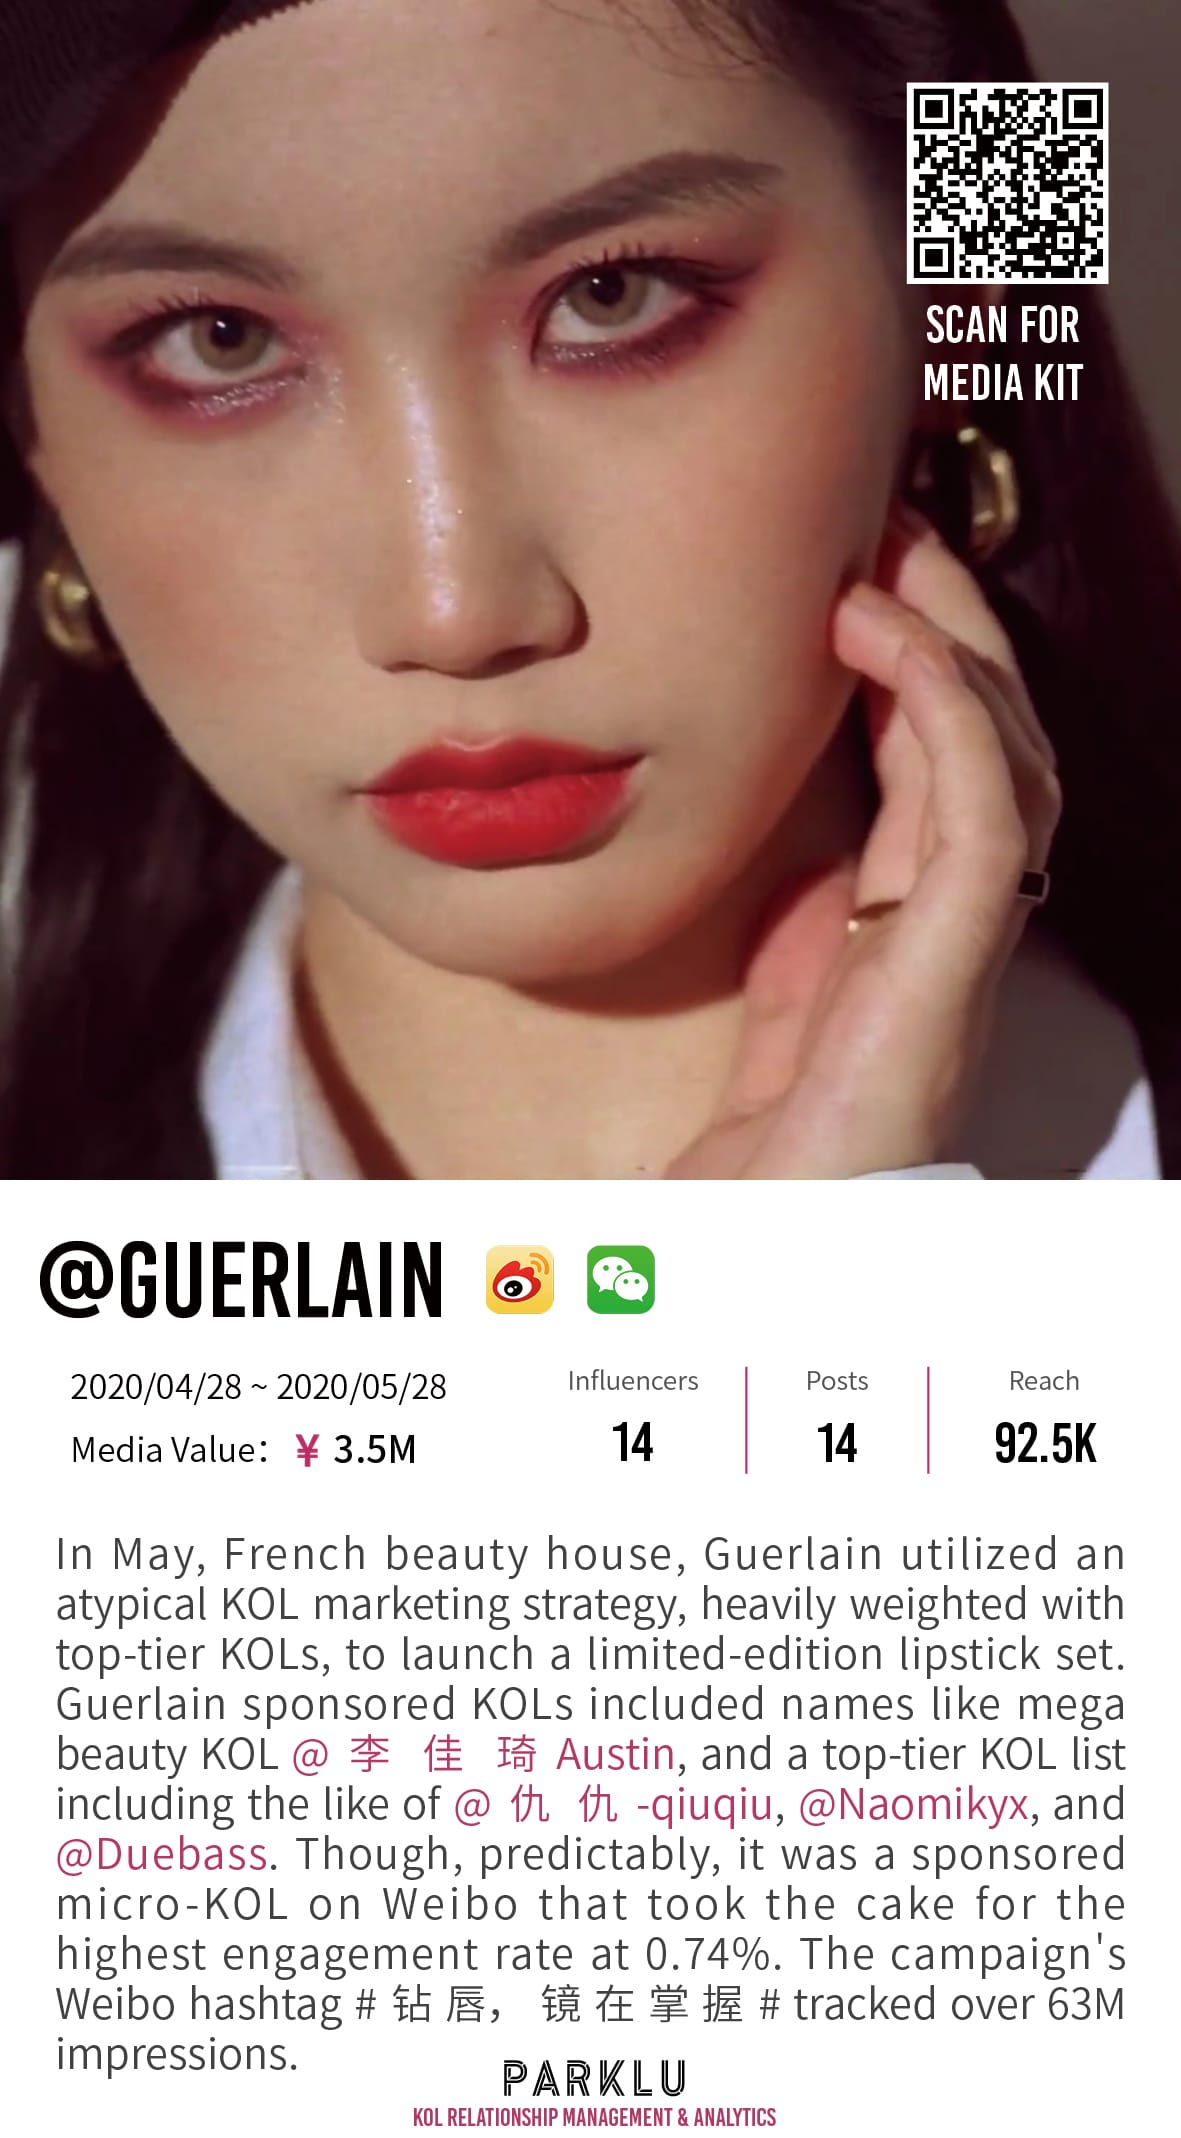 Guerlain limited-edition lipstick set